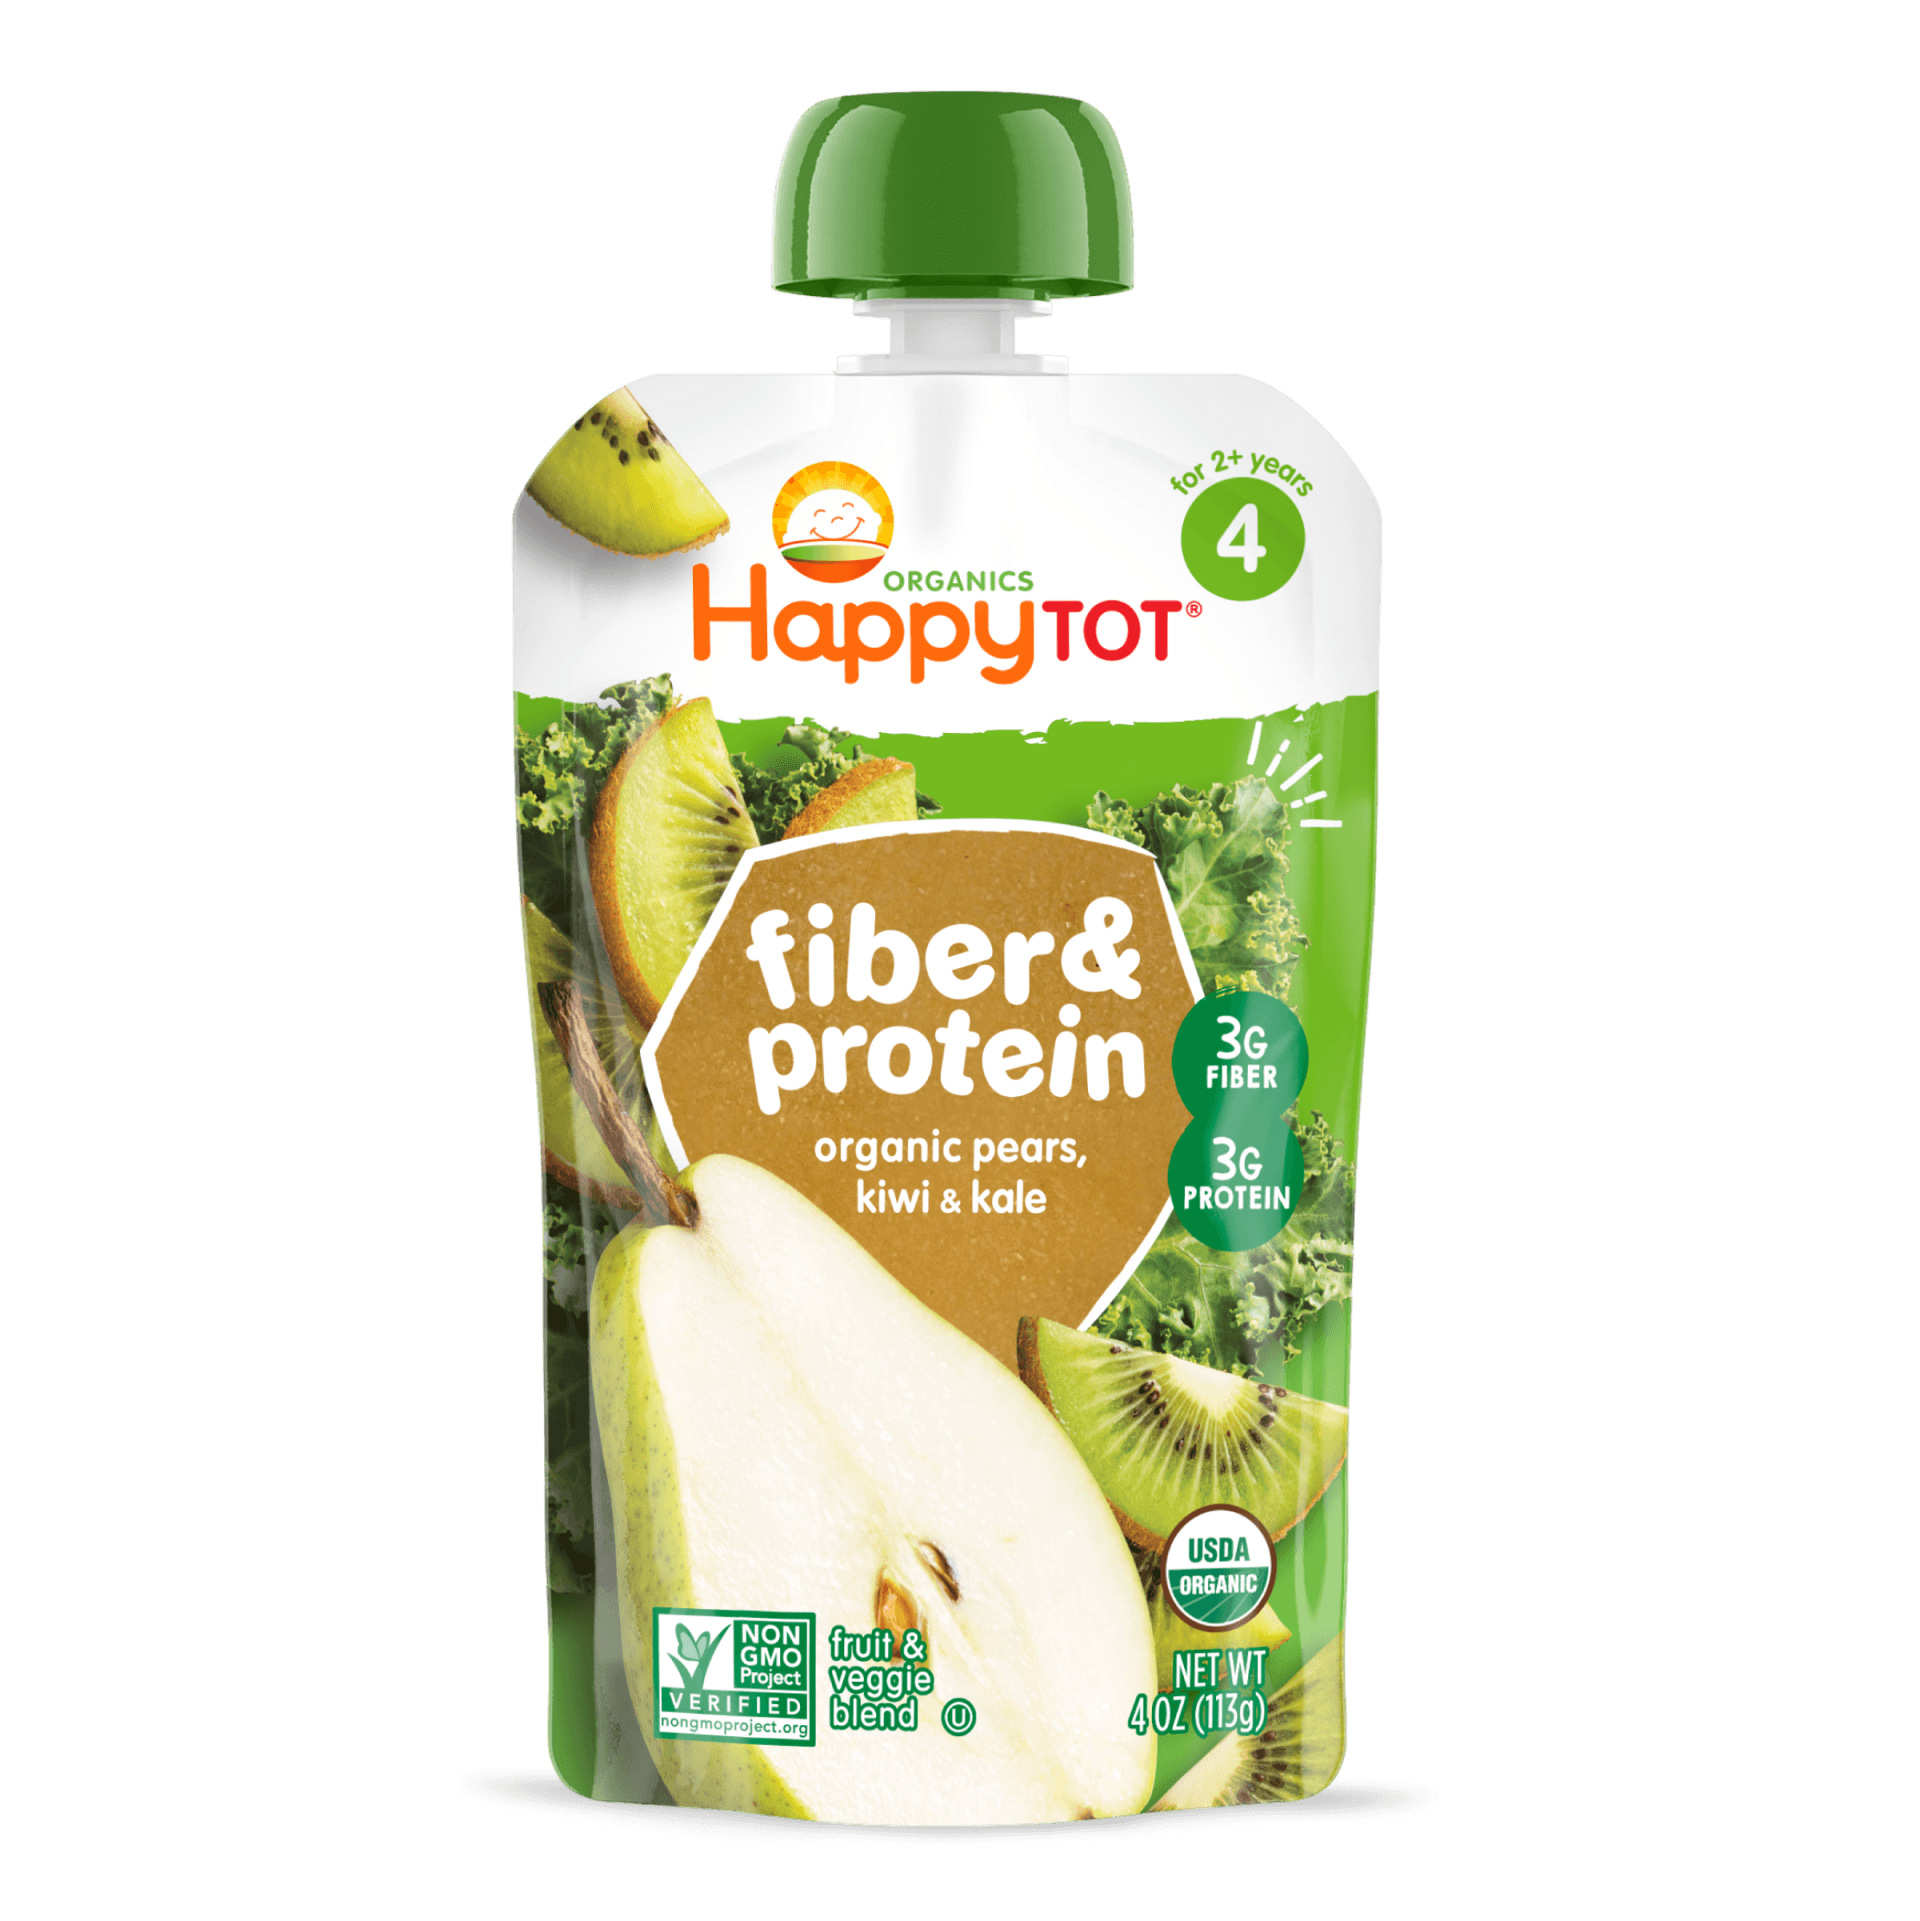 Happy Tot S4 - Fiber & Protein Organic Pear, Kiwi & Kale 4Oz pouch 16 units per case 4.0 oz